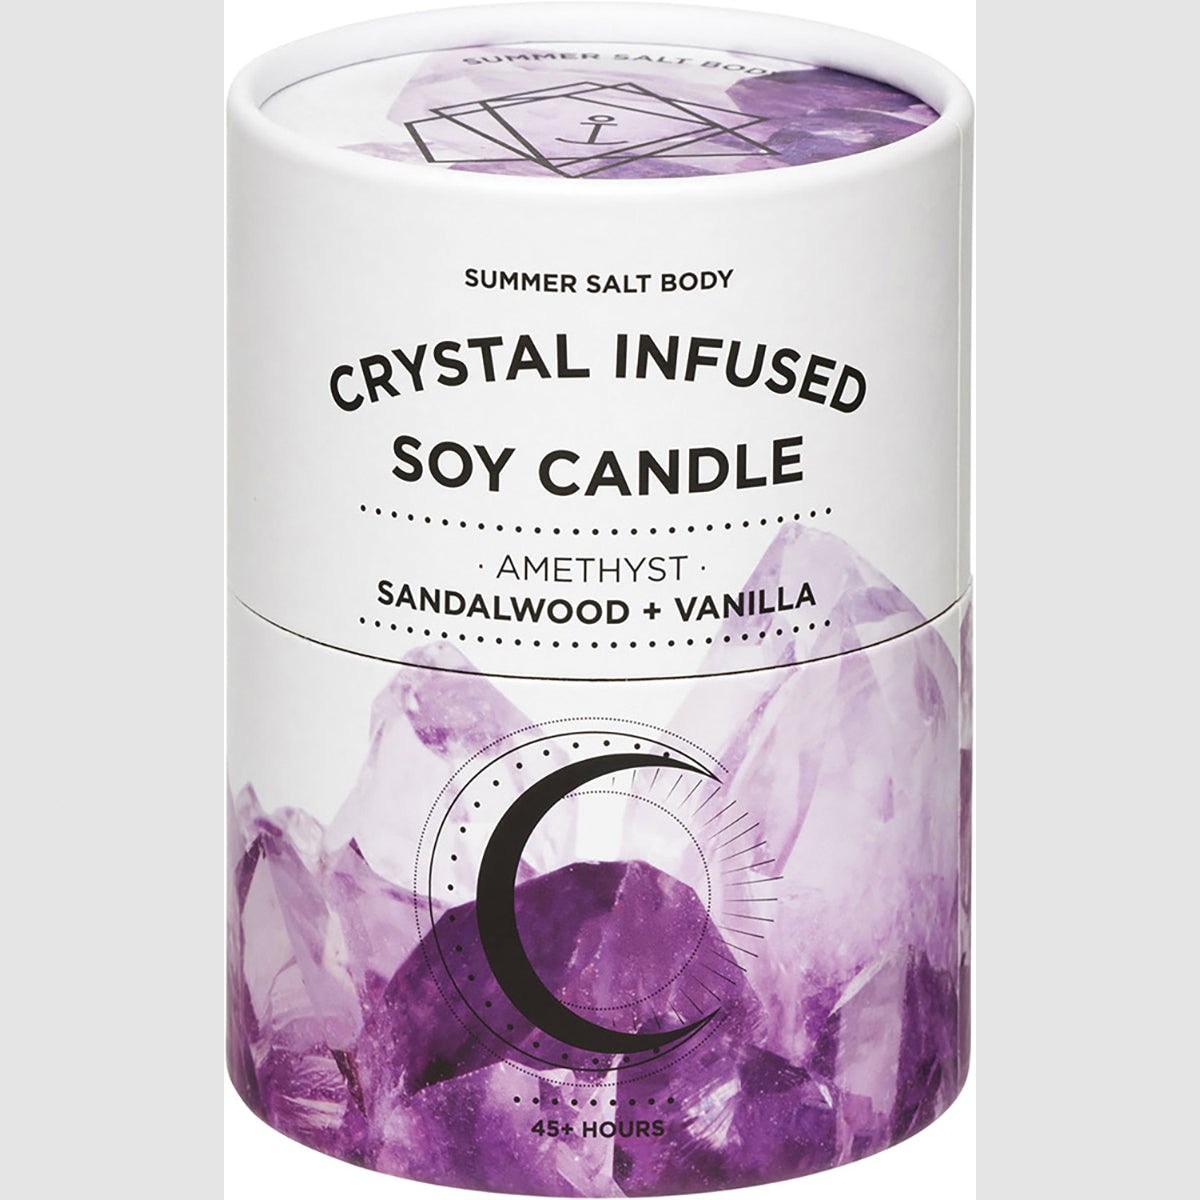 Summer Salt Body Crystal Infused Soy Candle Amethyst Sandalwood & Vanilla